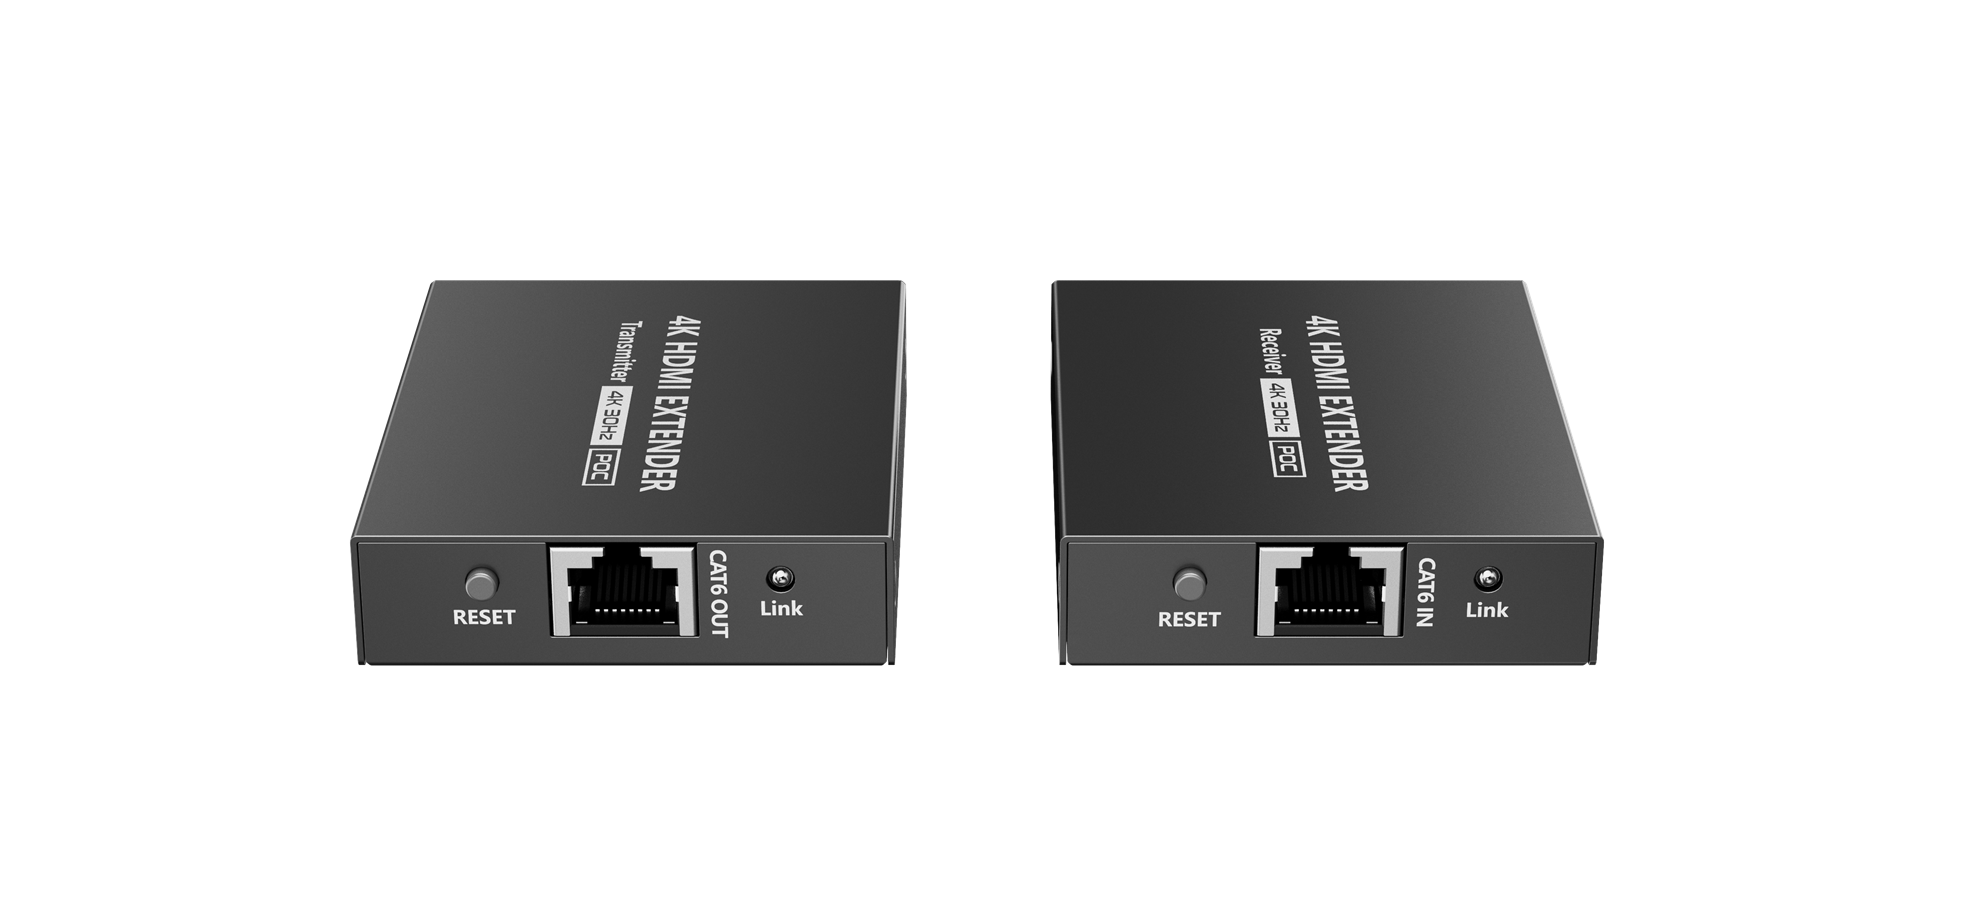 LKV372P - LENKENG HDMI & IR Extender Kit Over Cat6/6A. 1080p up to 70m